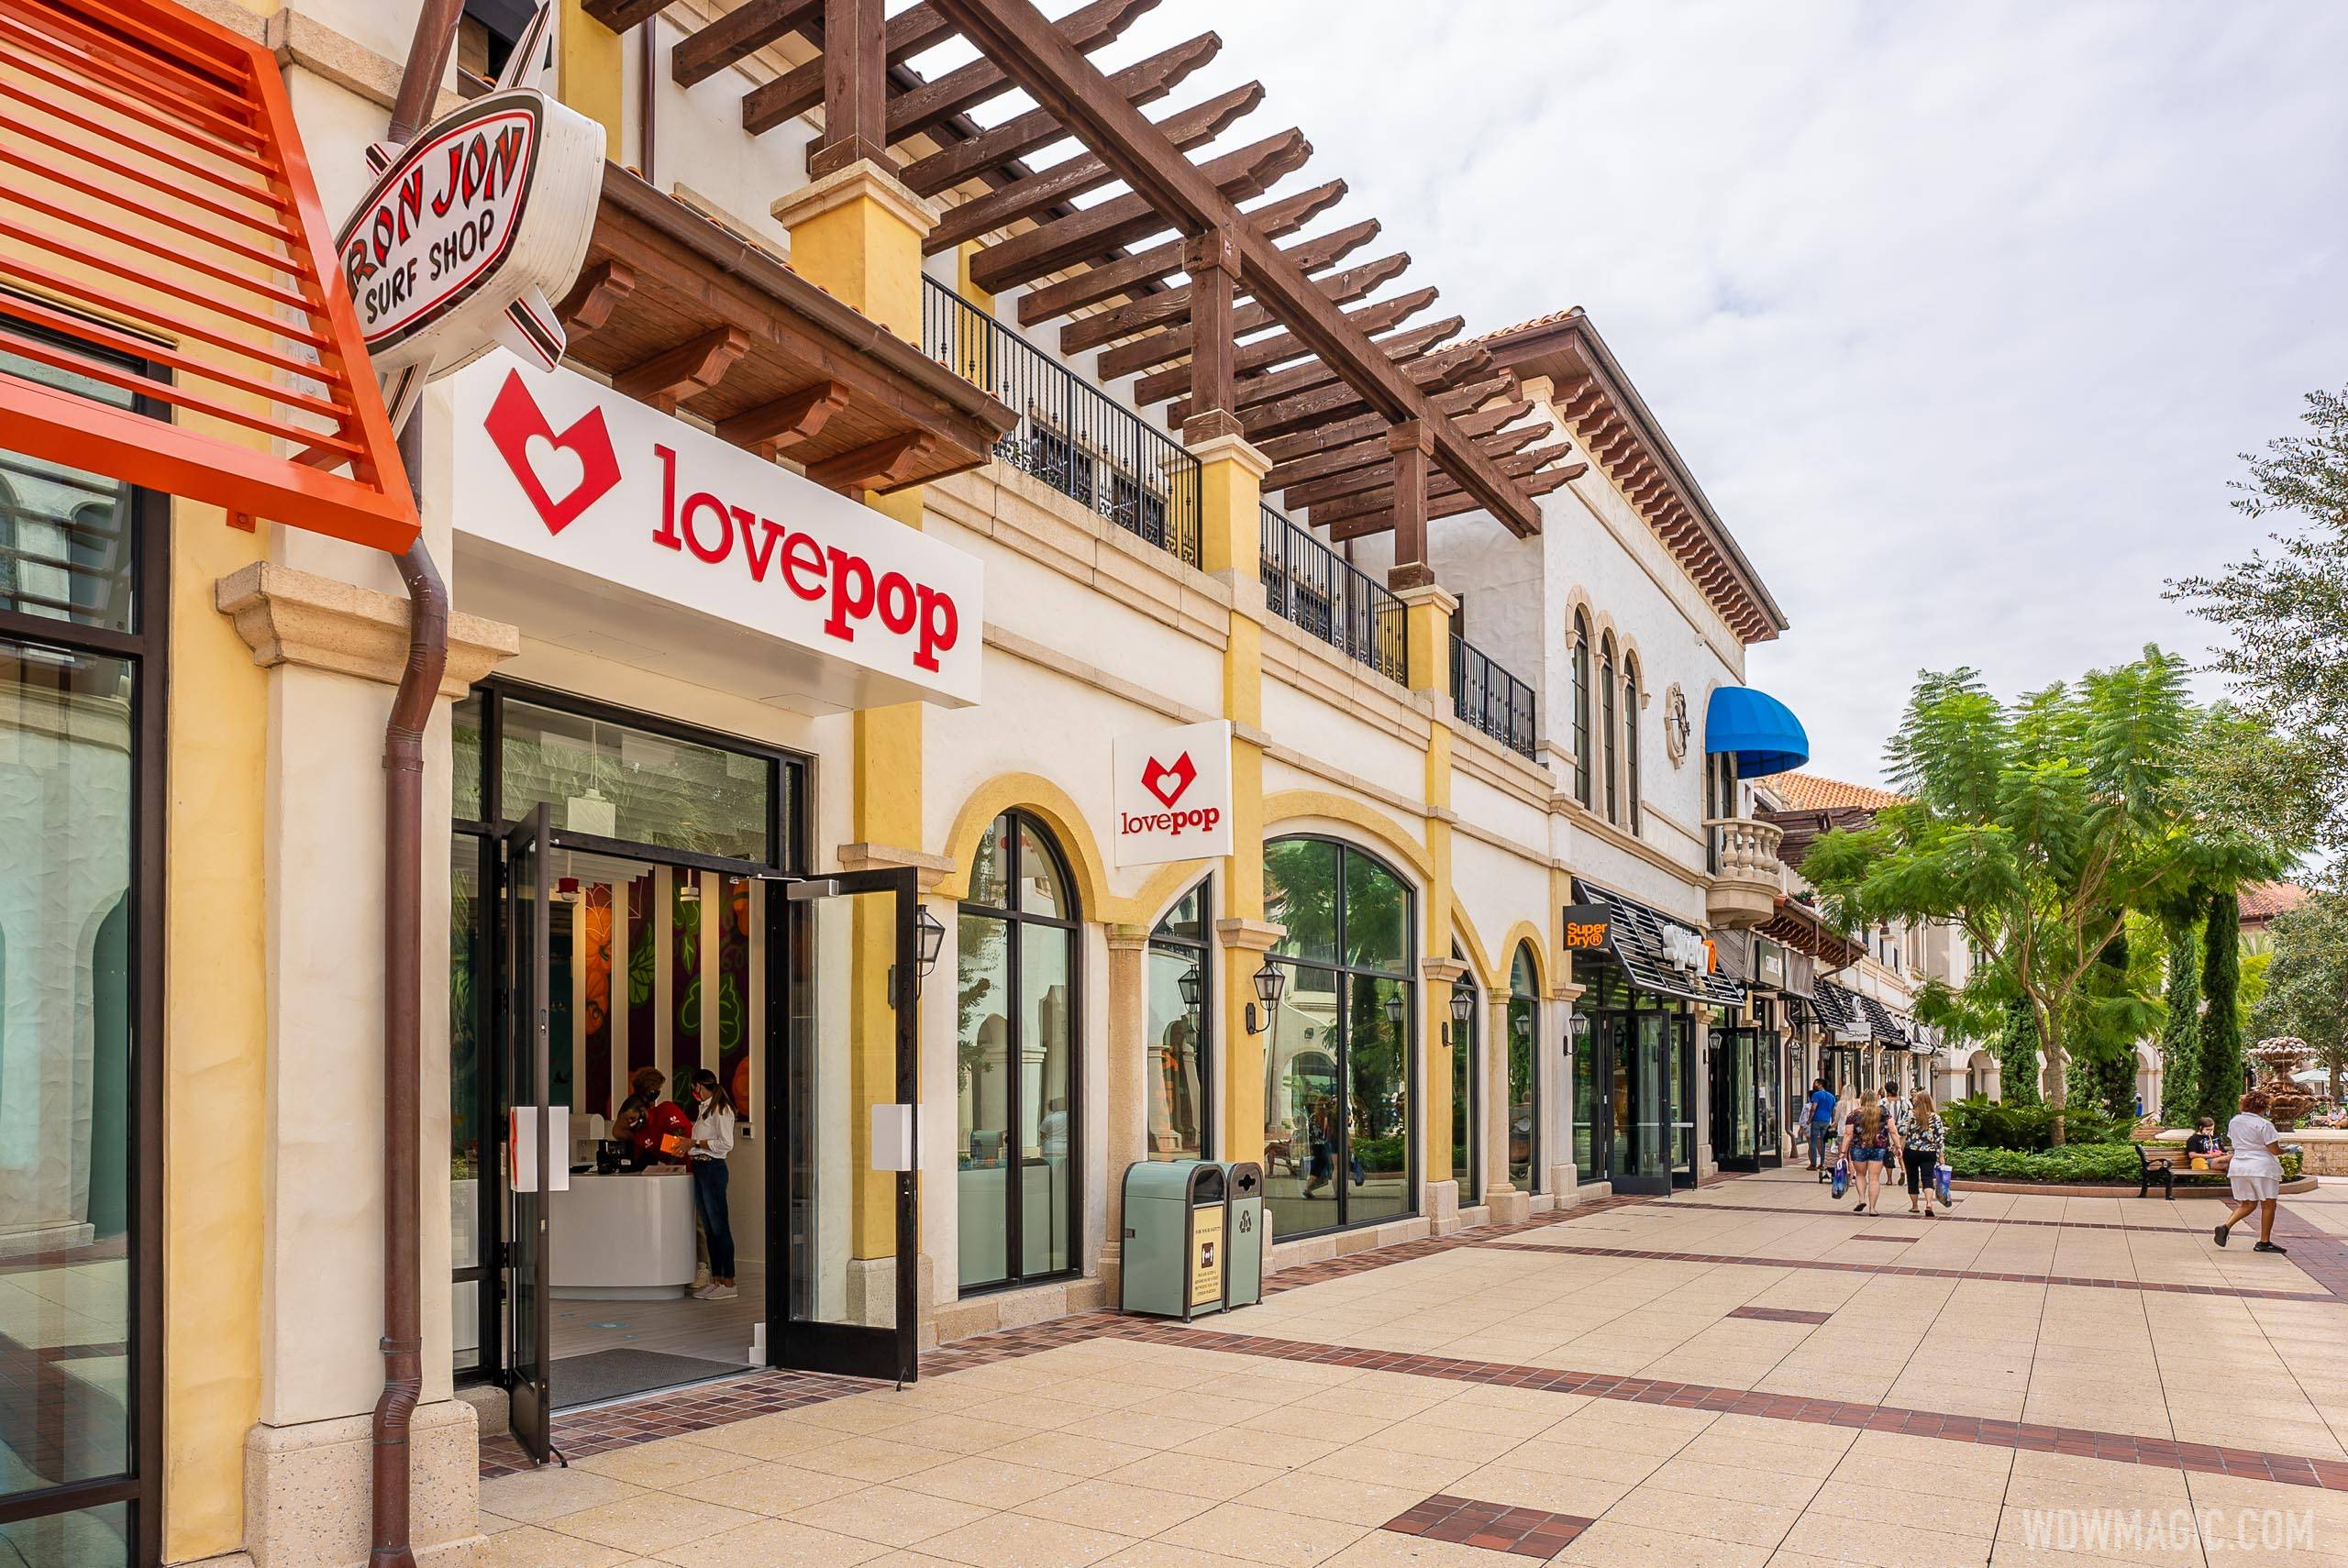 PHOTOS - Lovepop store opens at Disney Springs